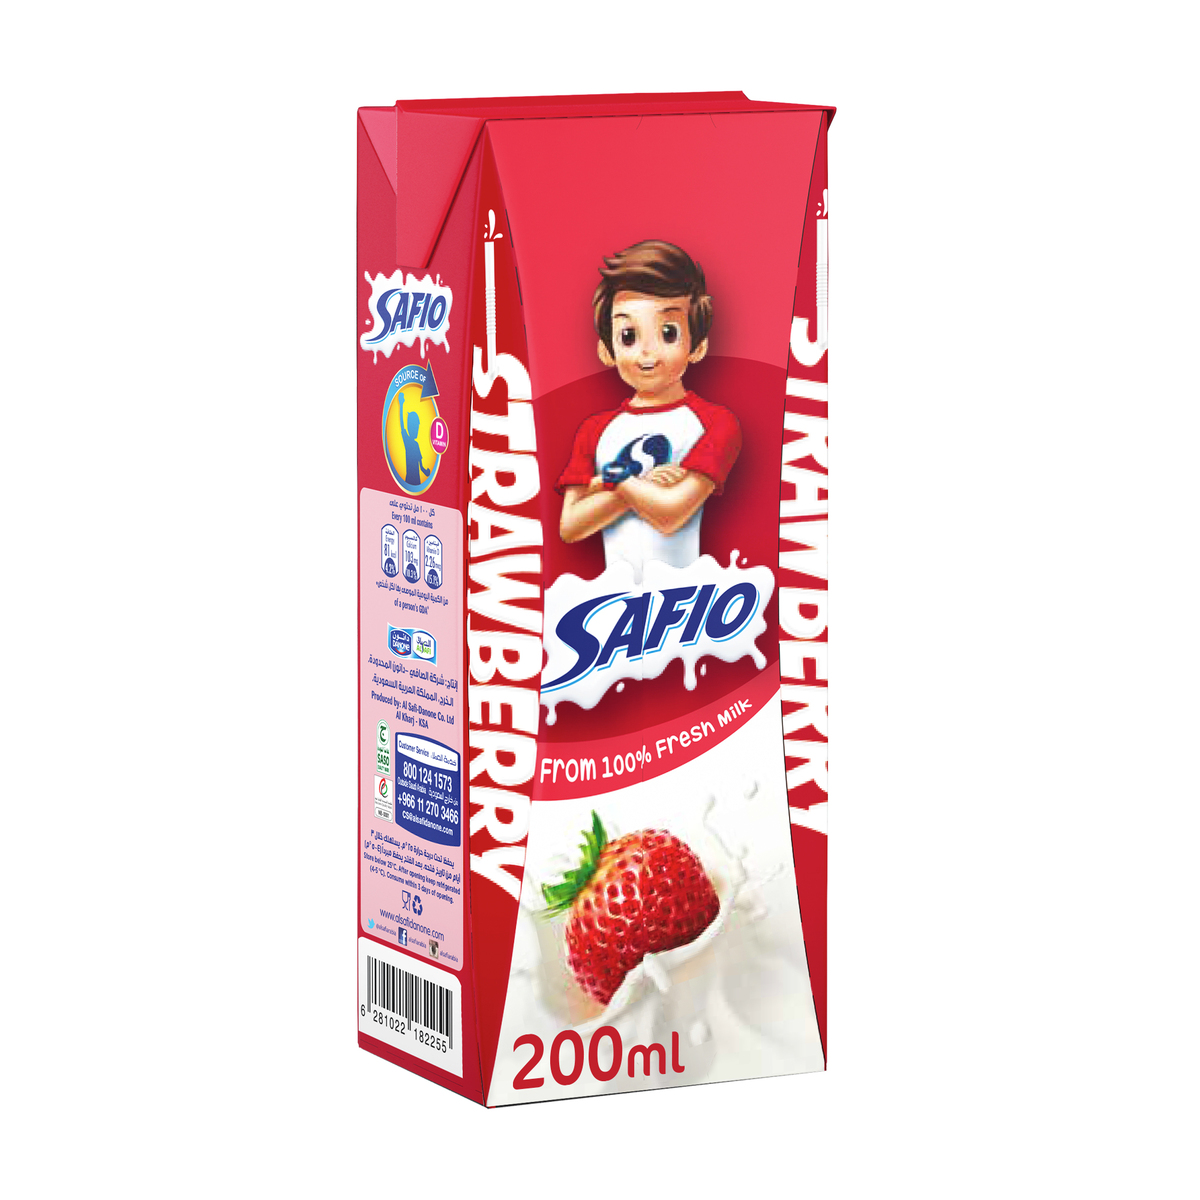 Safio UHT Milk Strawberry Flavor 6 x 200ml